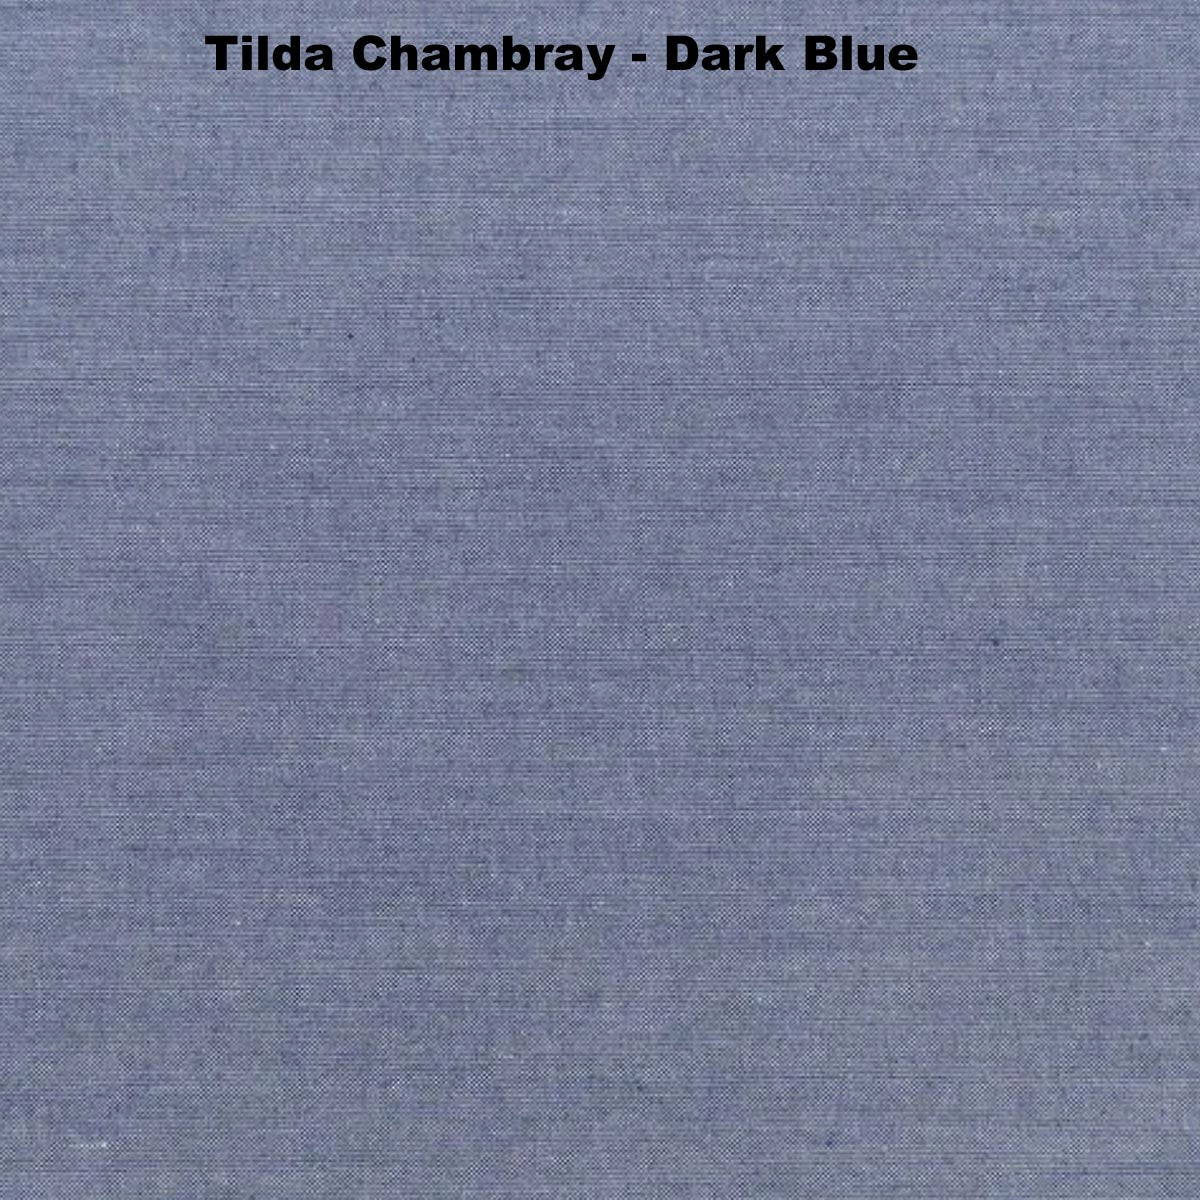 Tilda Chambray - Dark Blue #160007